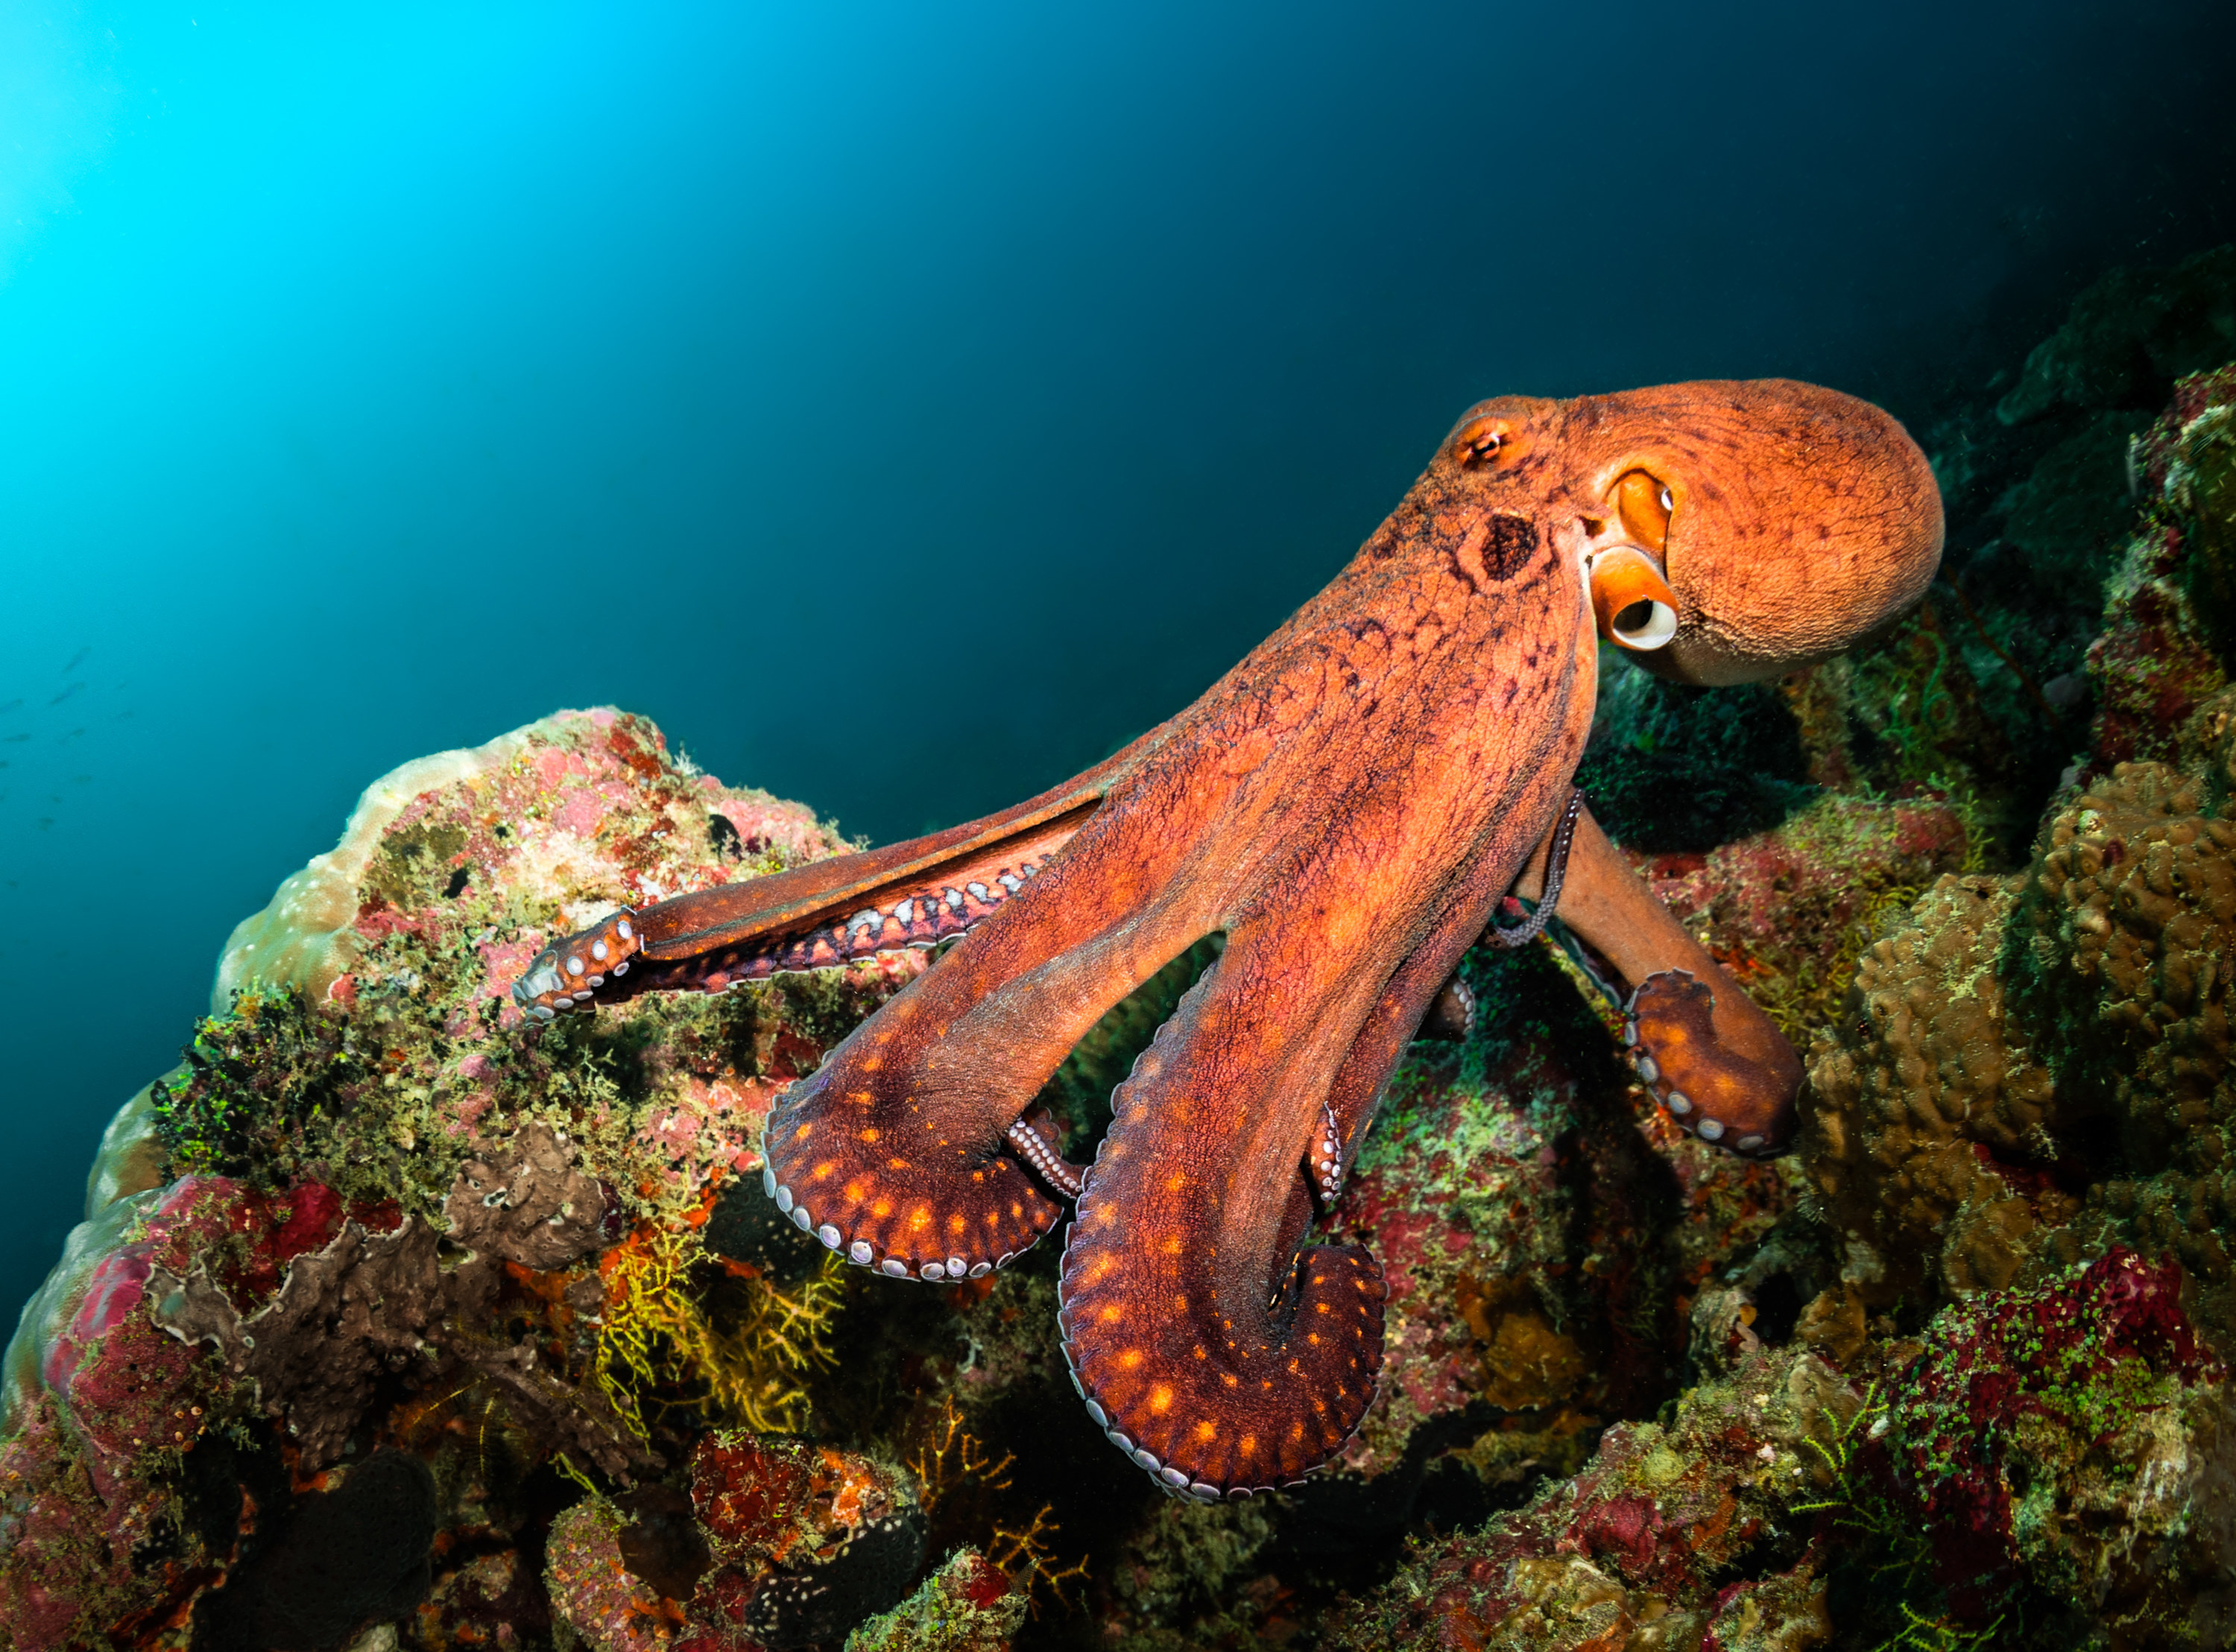 An octopus underwater